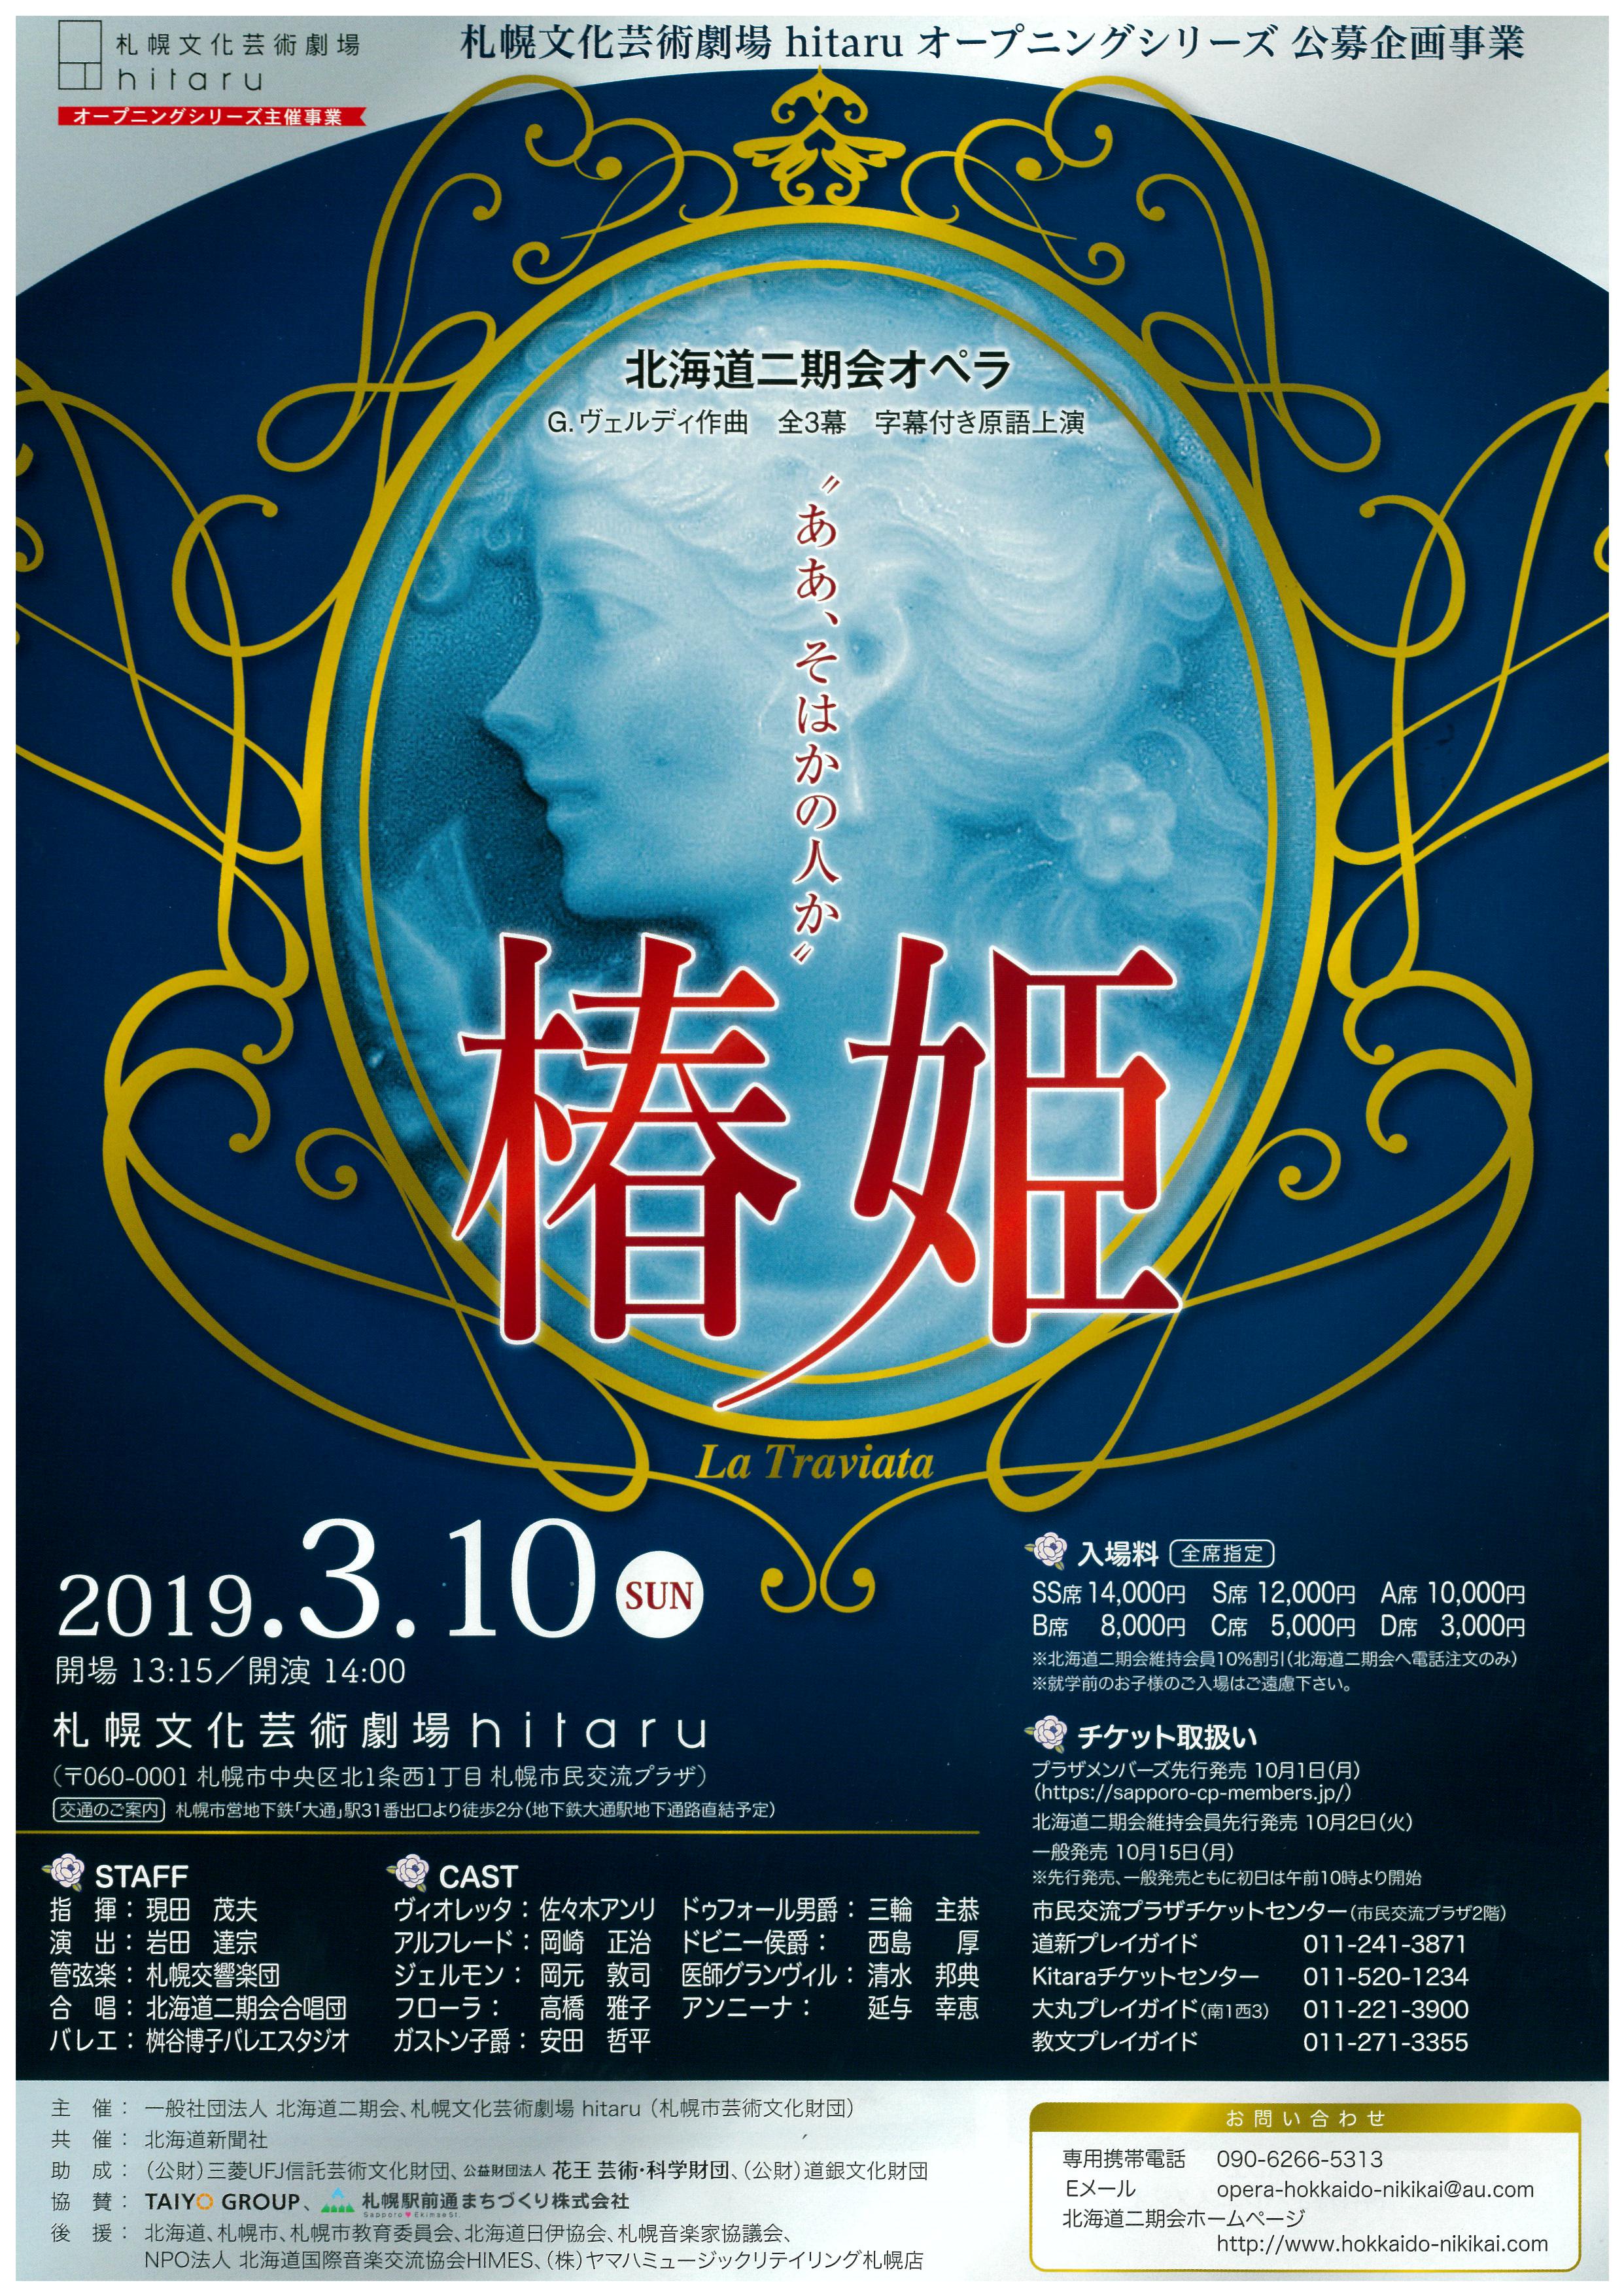 【公募企画事業】北海道二期会 オペラ「椿姫」公演詳細公開イメージ1枚目